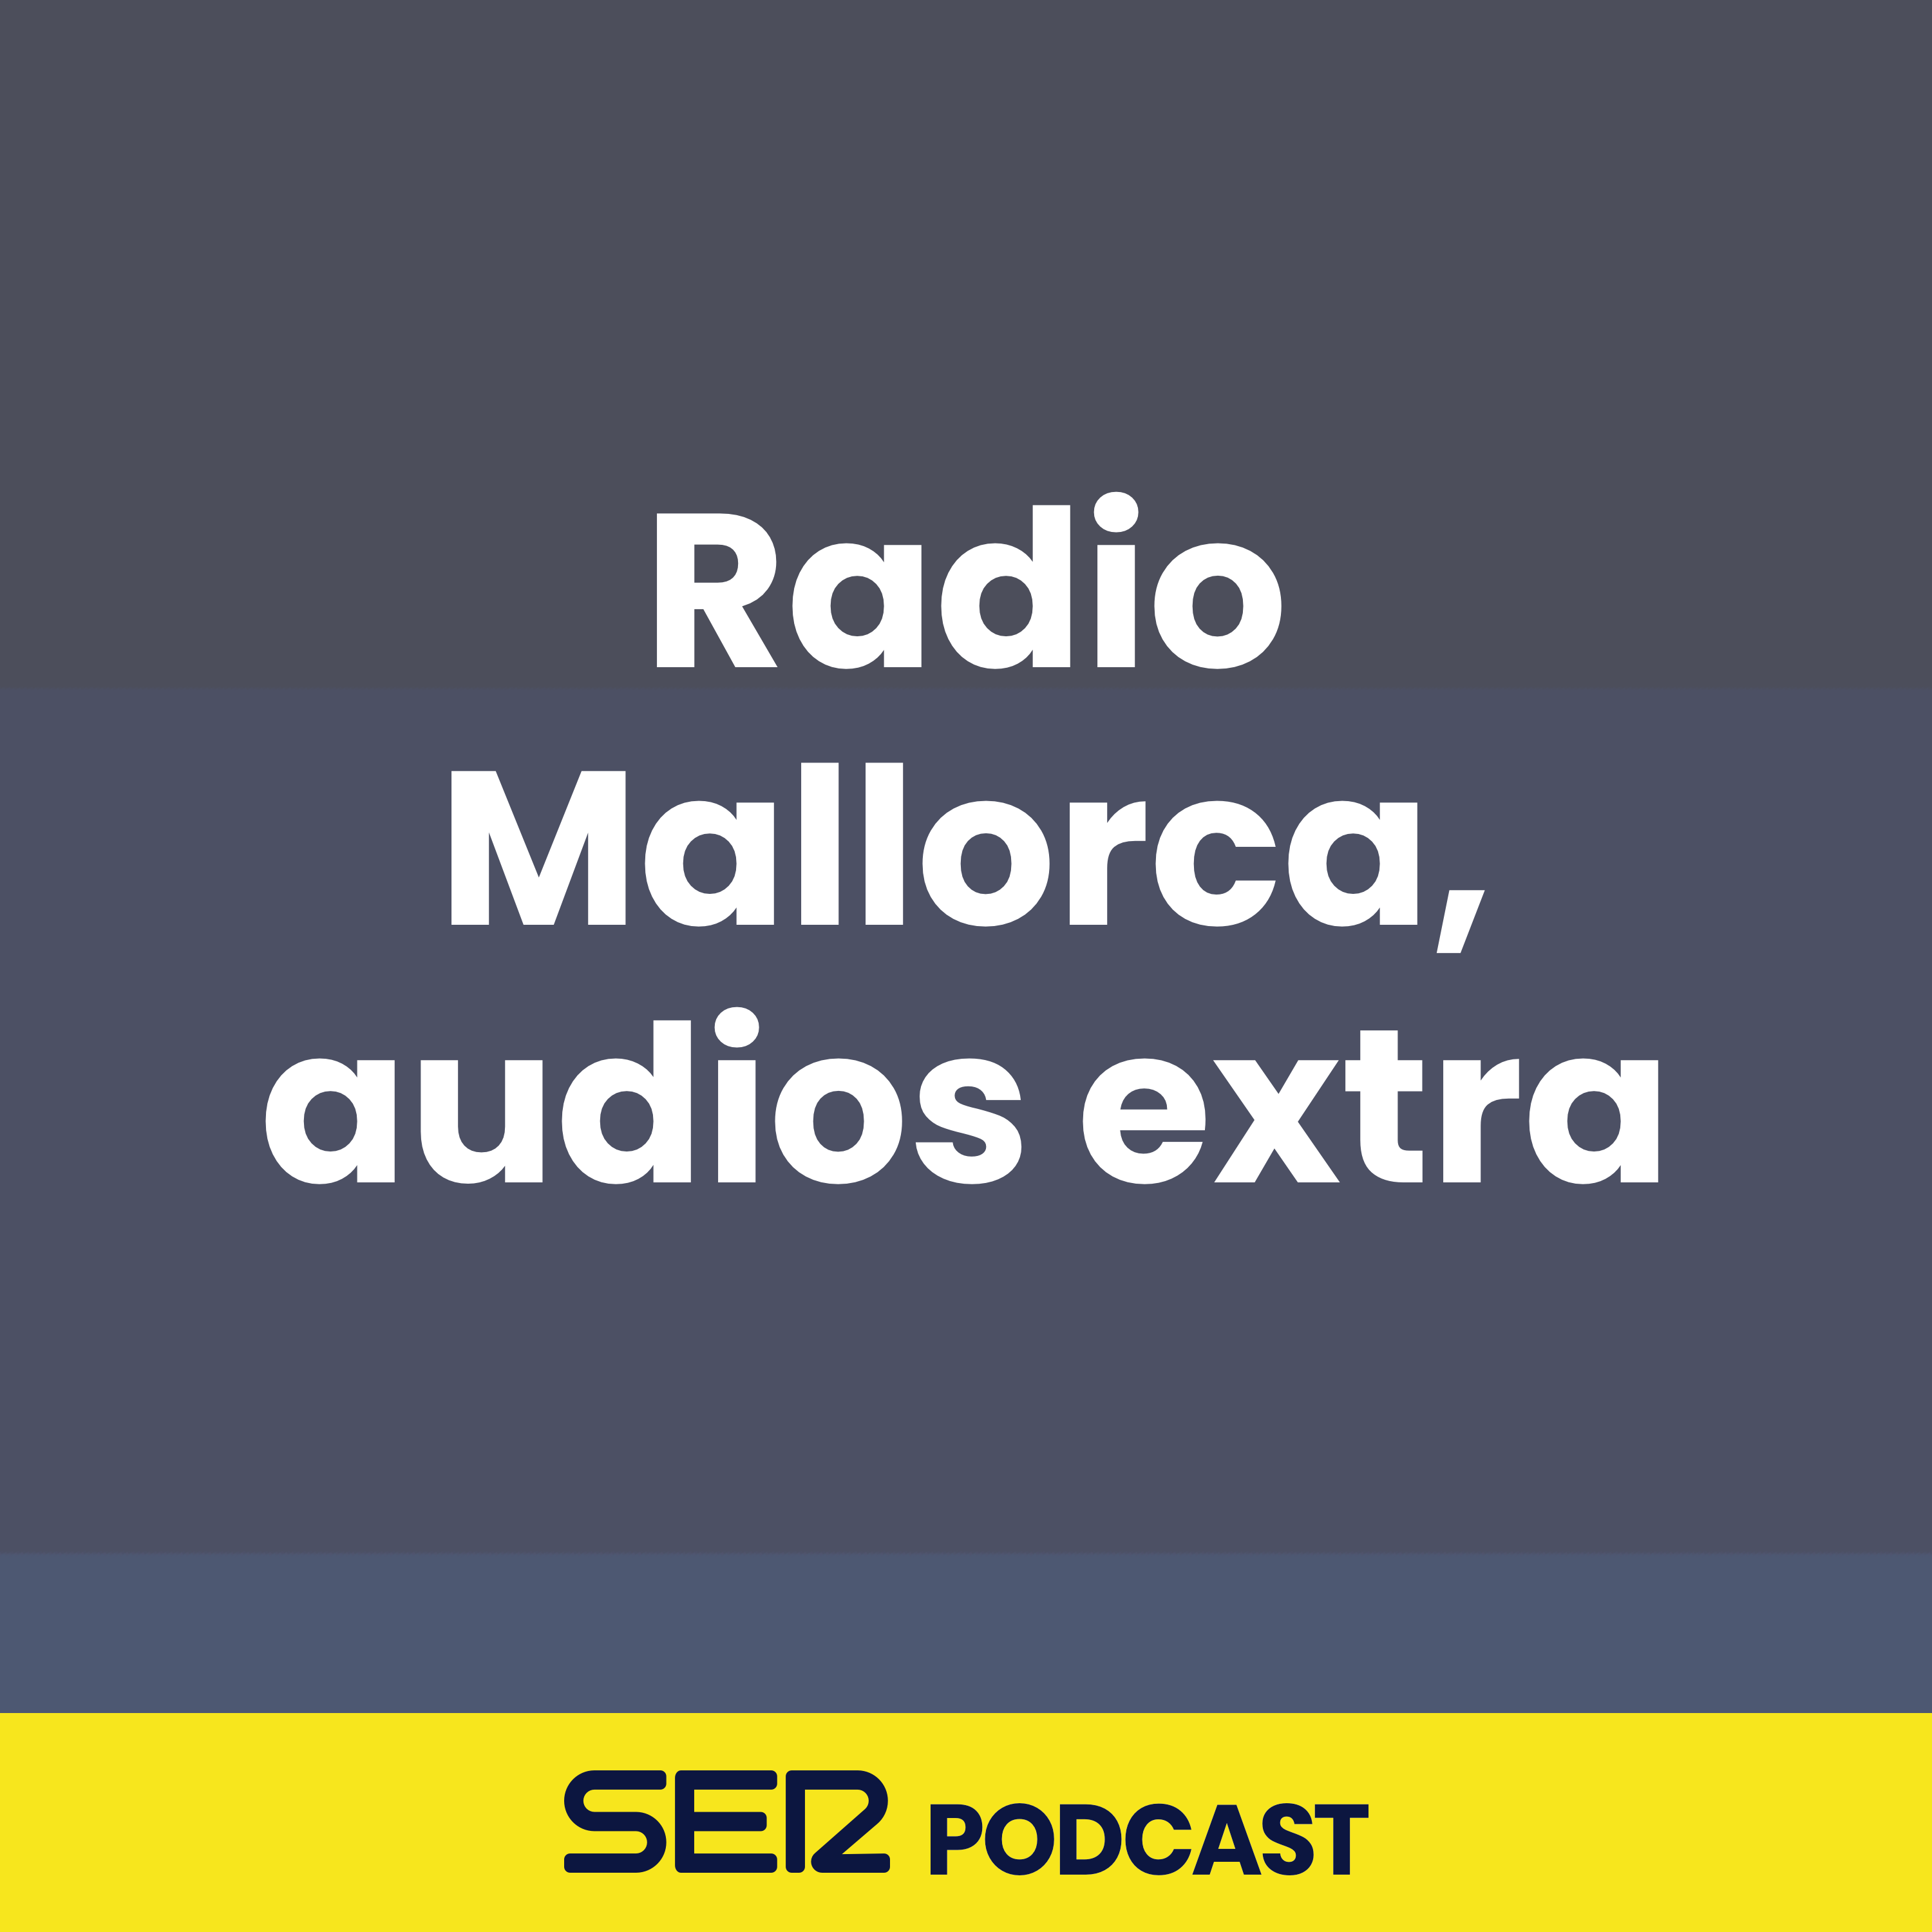 Radio Mallorca, audios extra